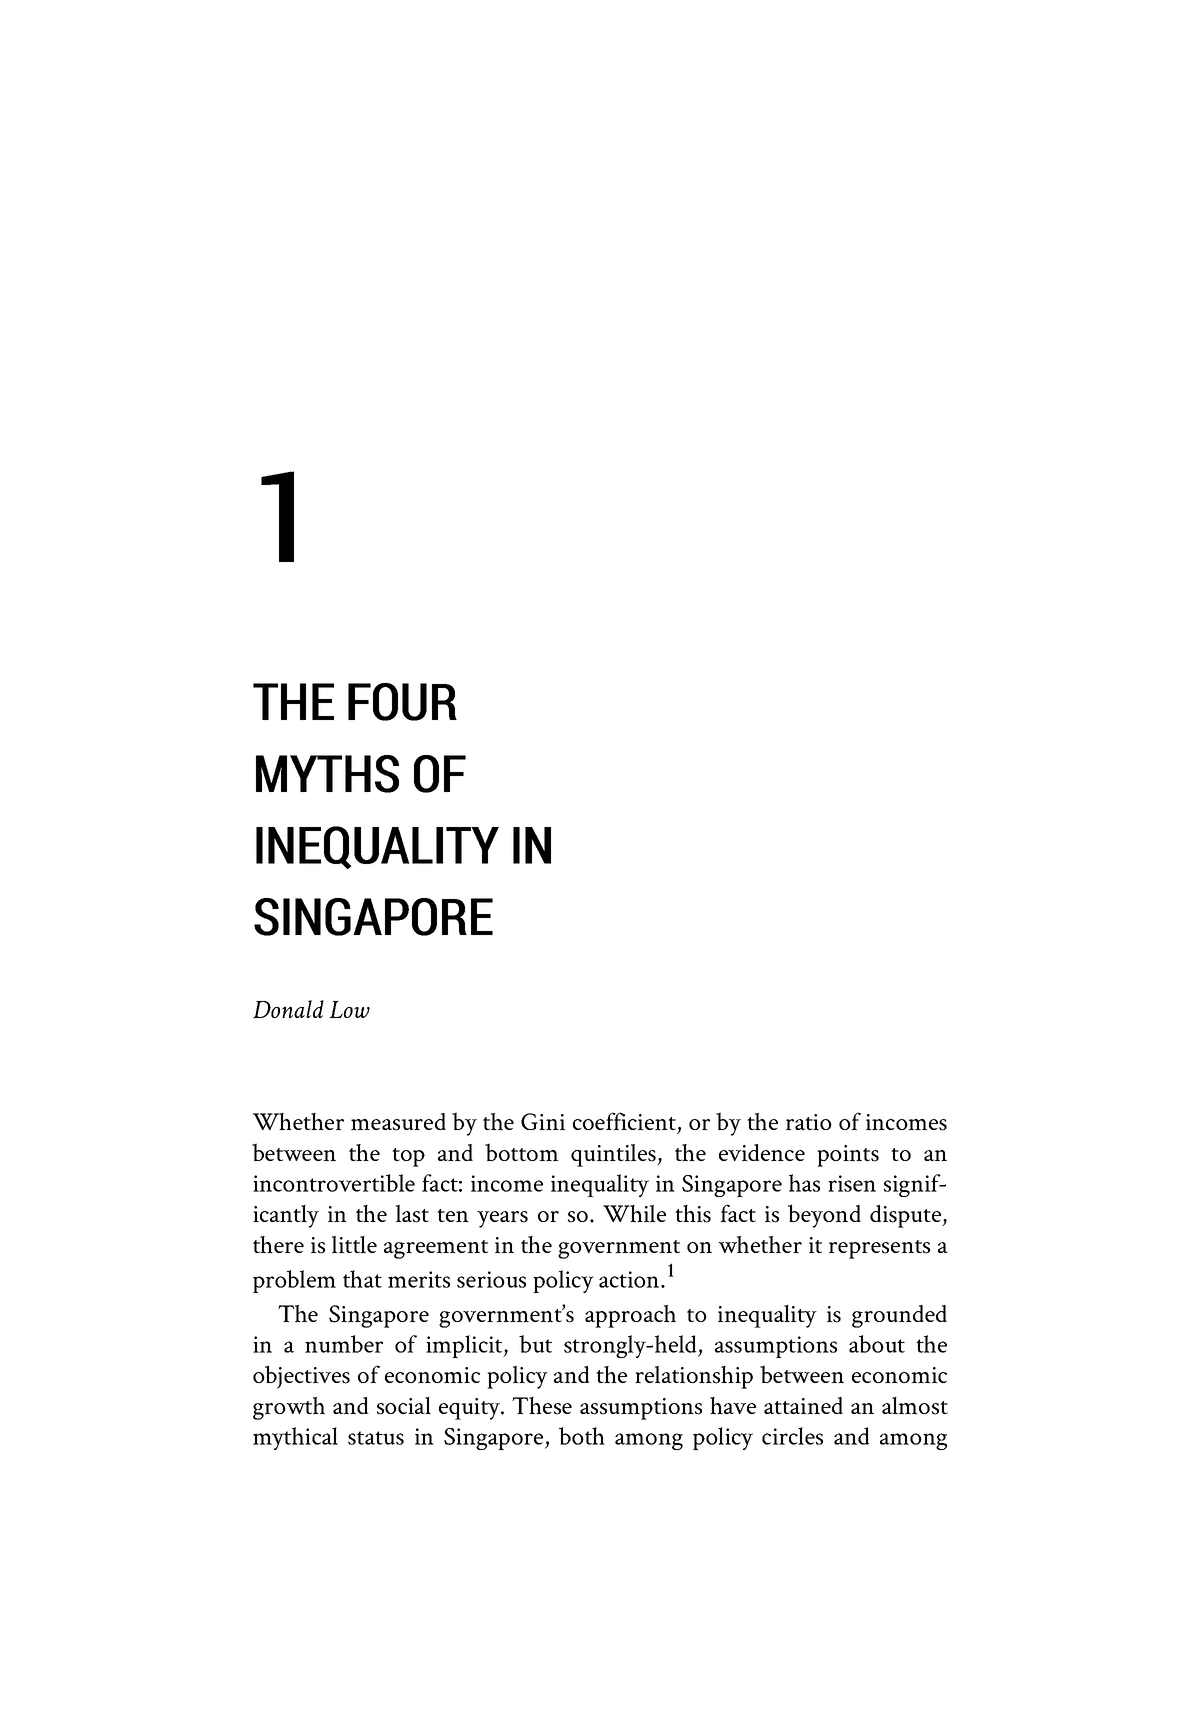 inequality in singapore essay